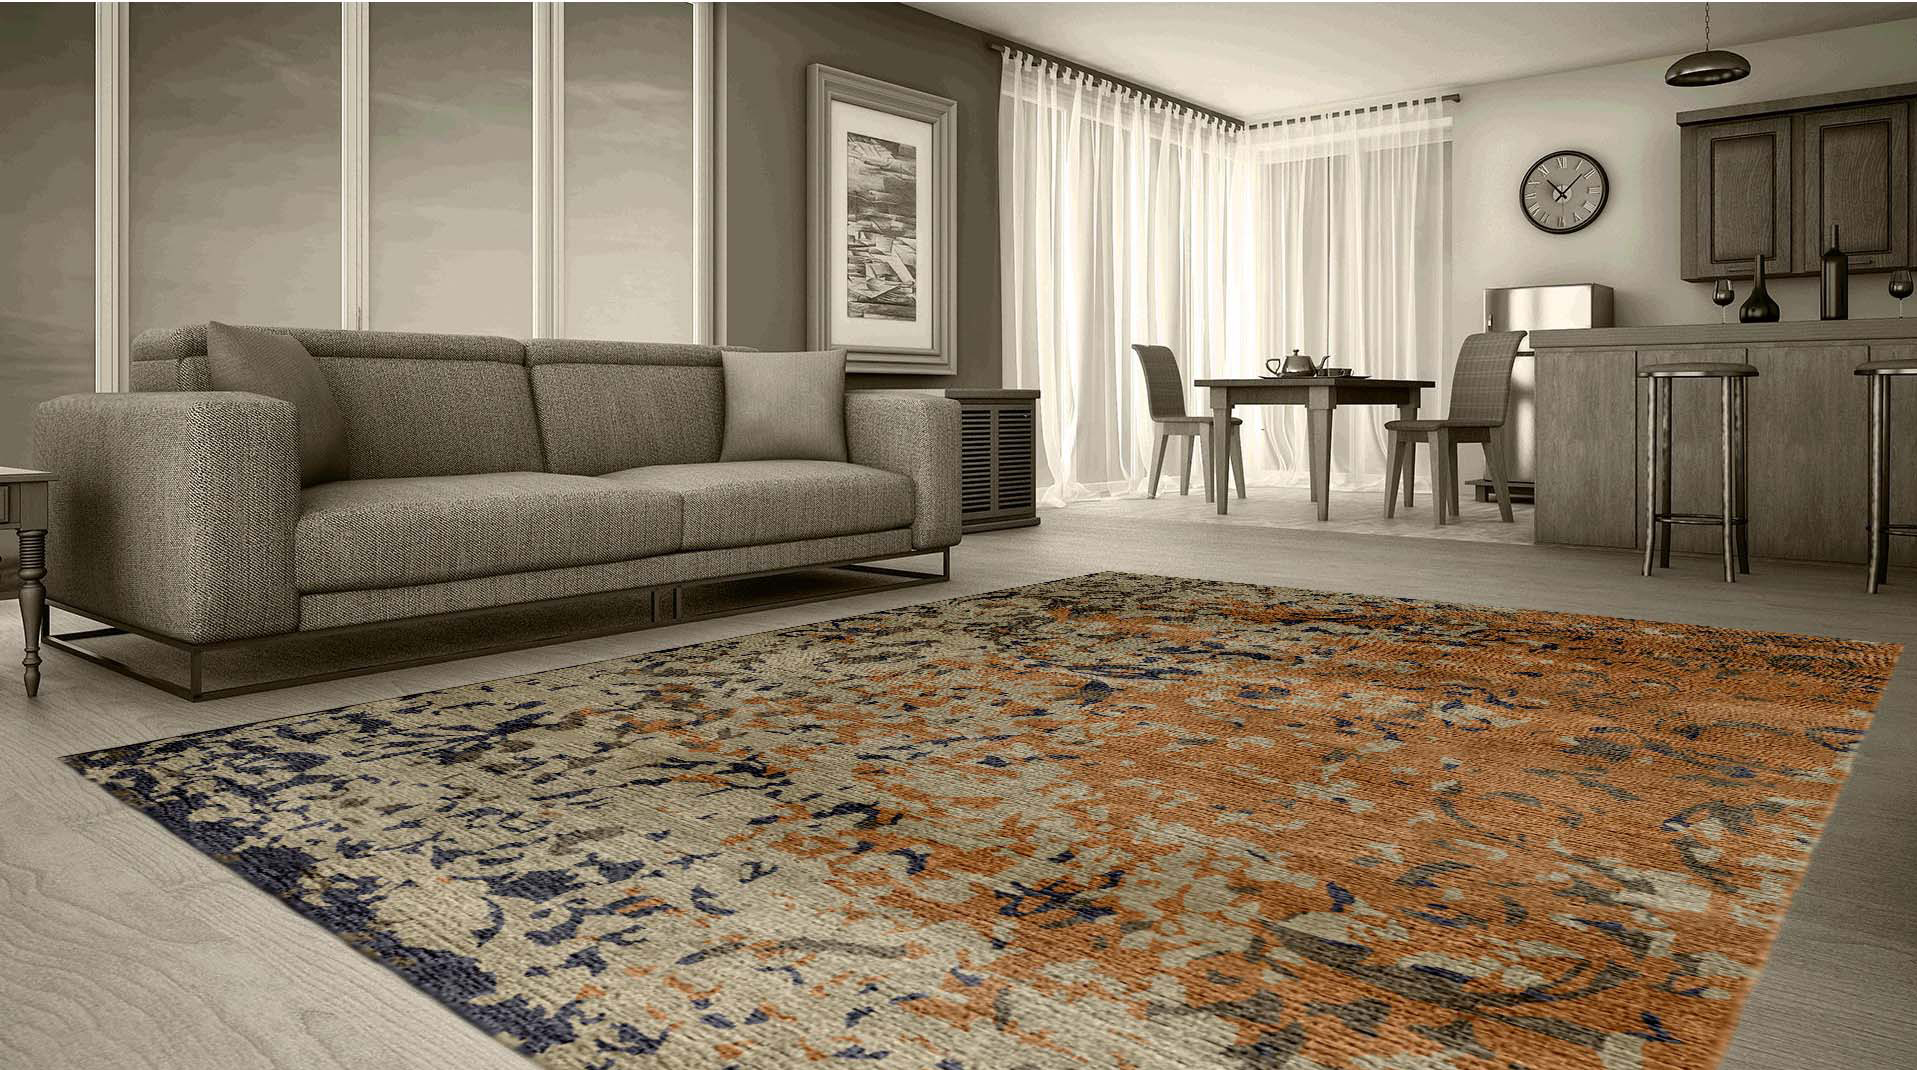 center carpet for living room ideas